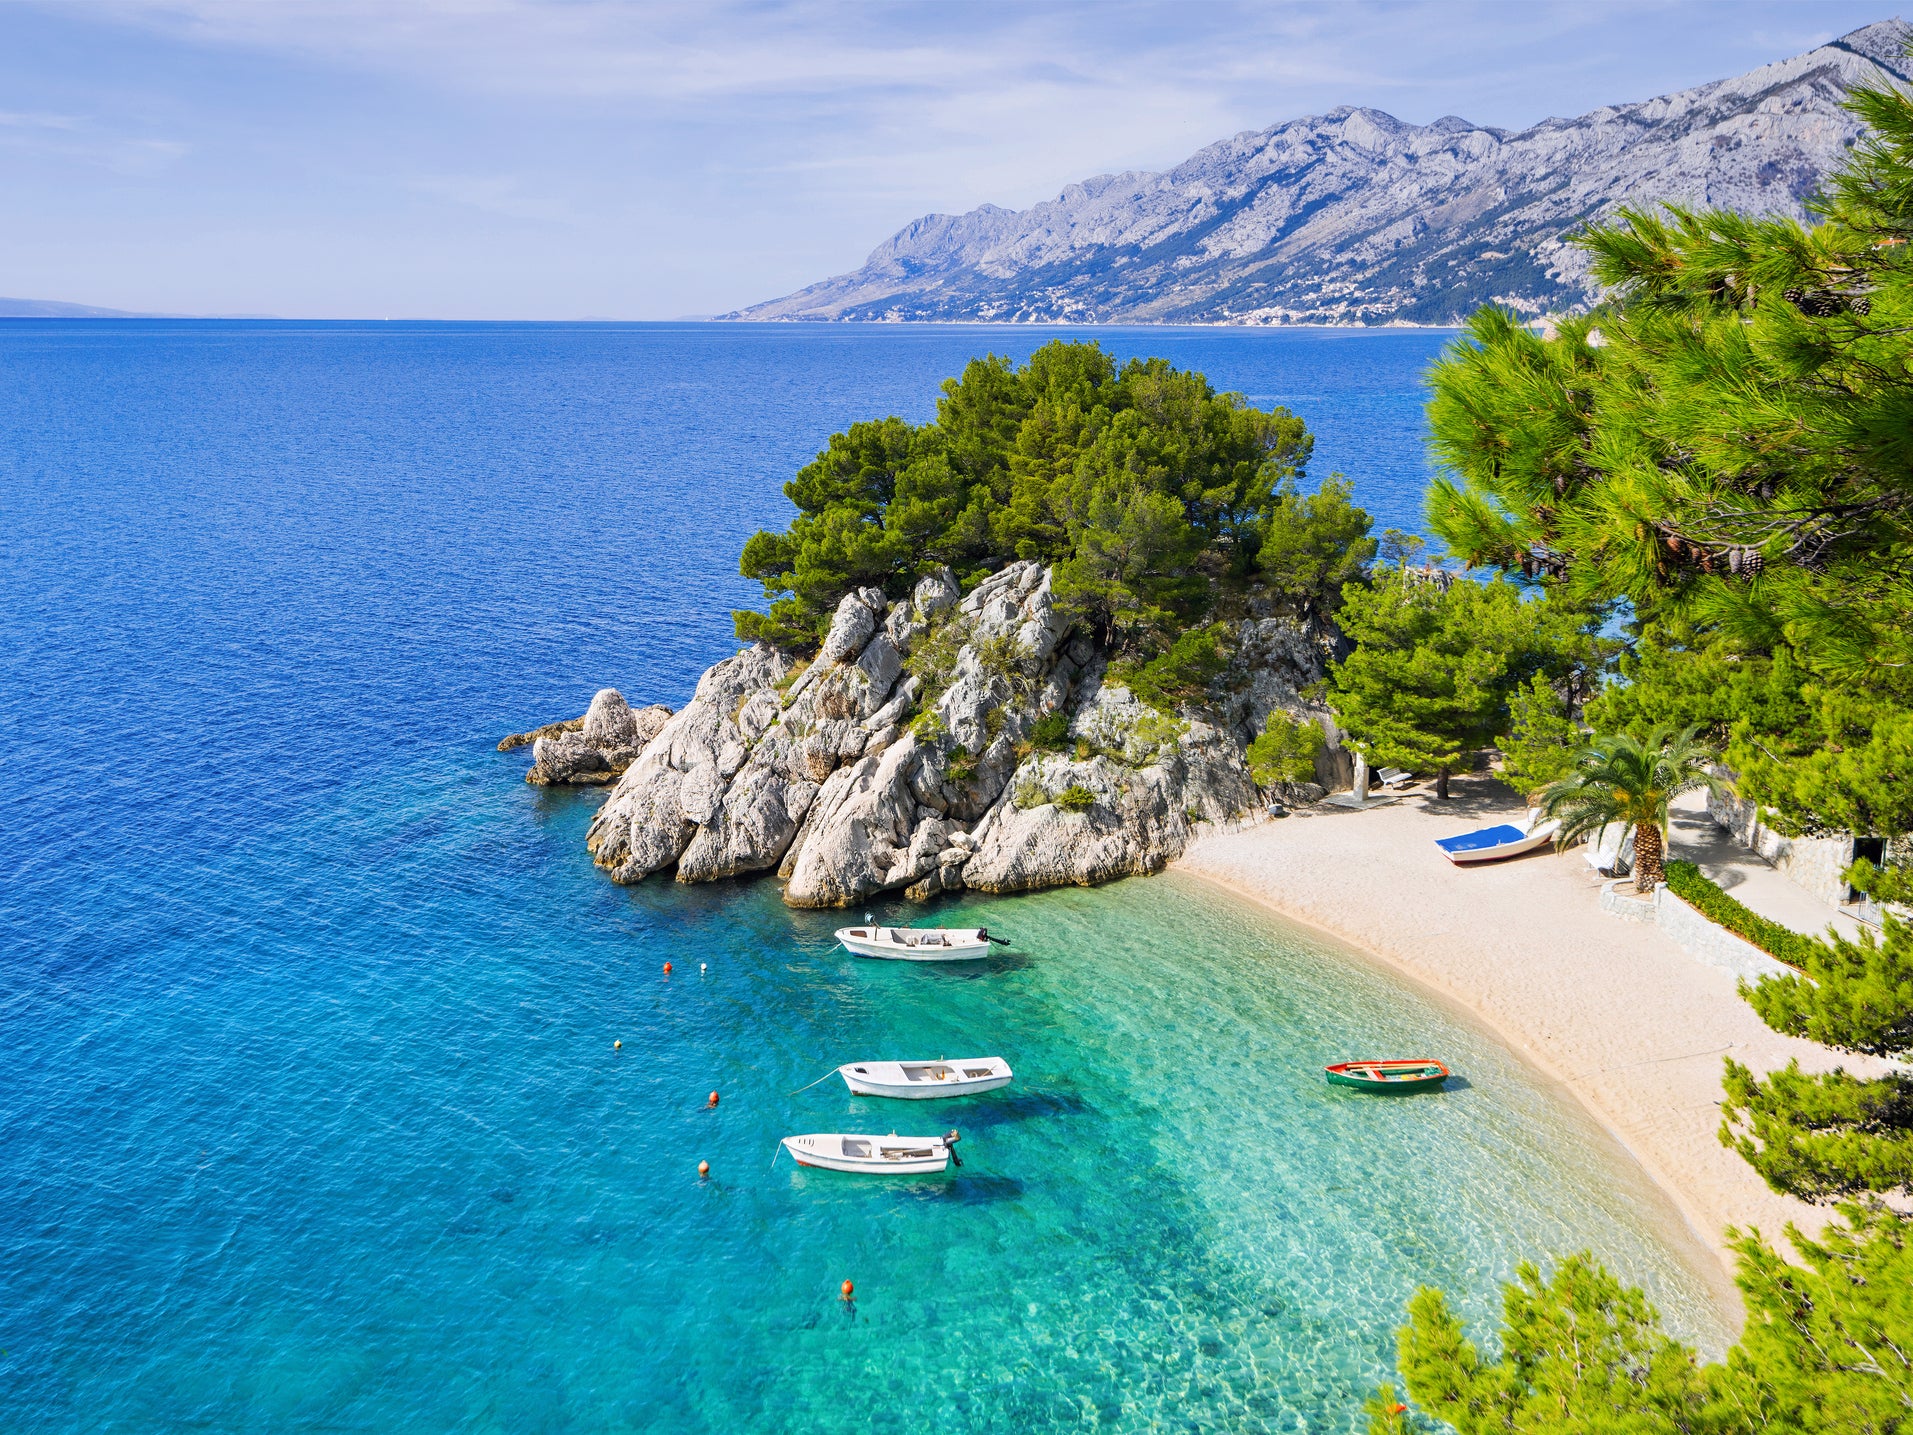 Croatia's Adriatic coast